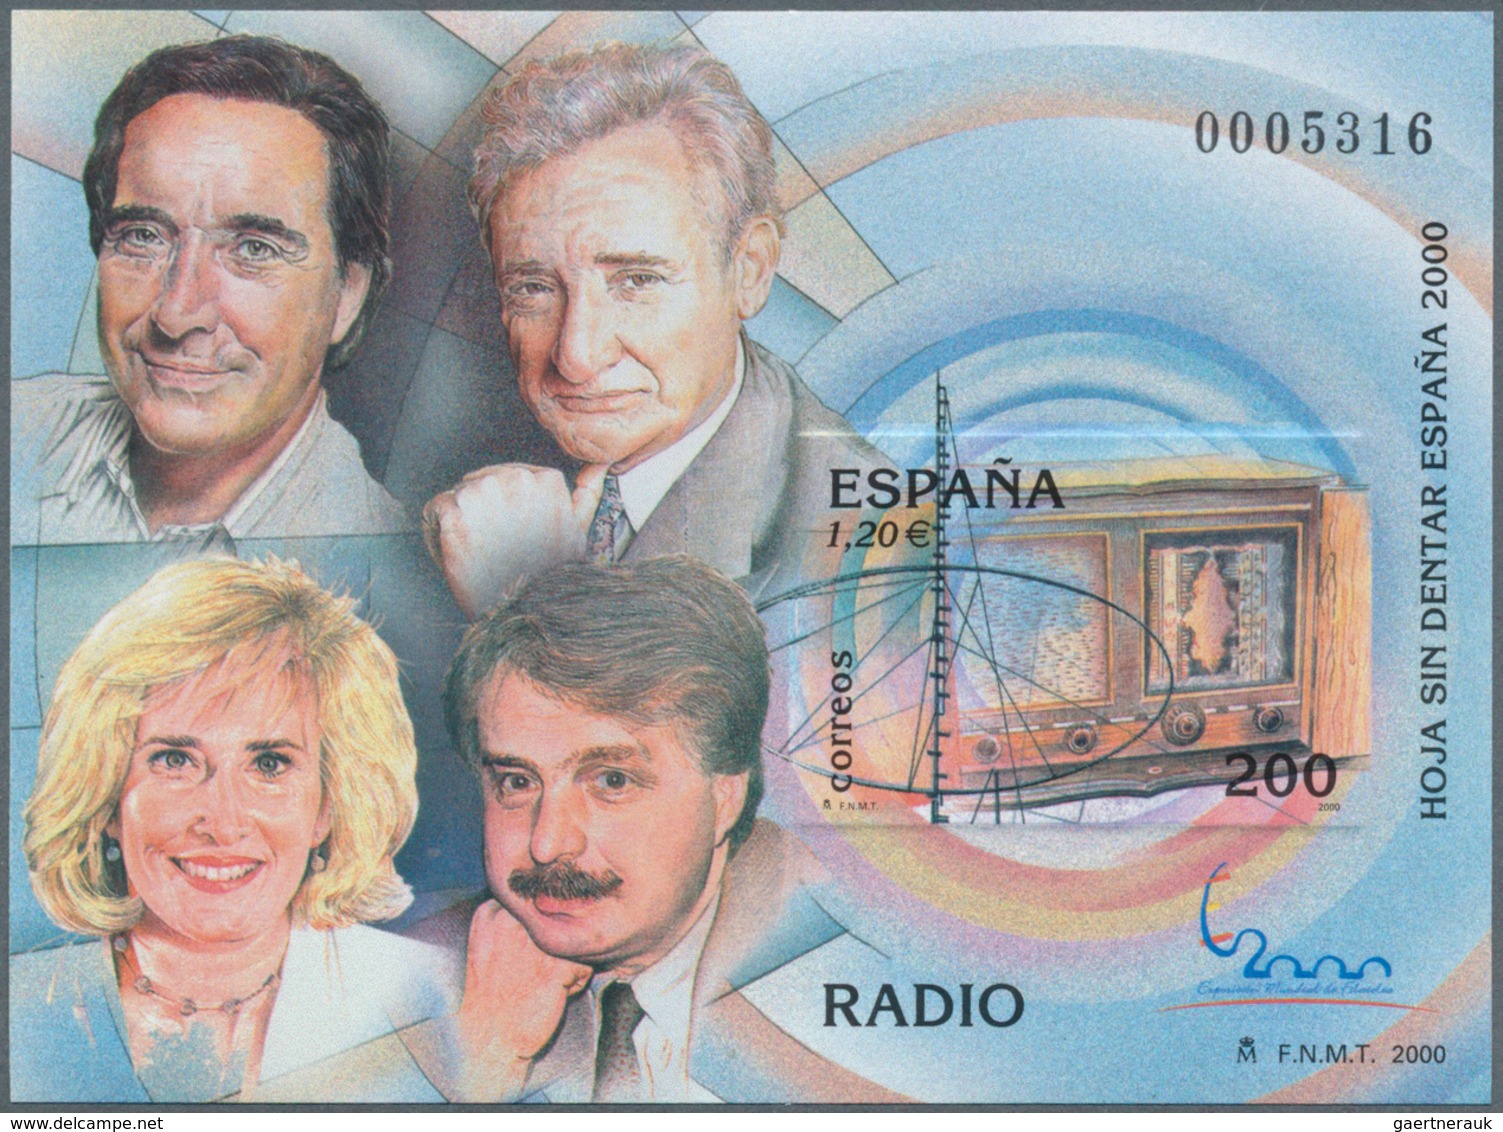 28287 Spanien: 2000. Espana 2000 Intl. Philatelic Exhibition - Set of 11 imperforate souvenir sheets overp